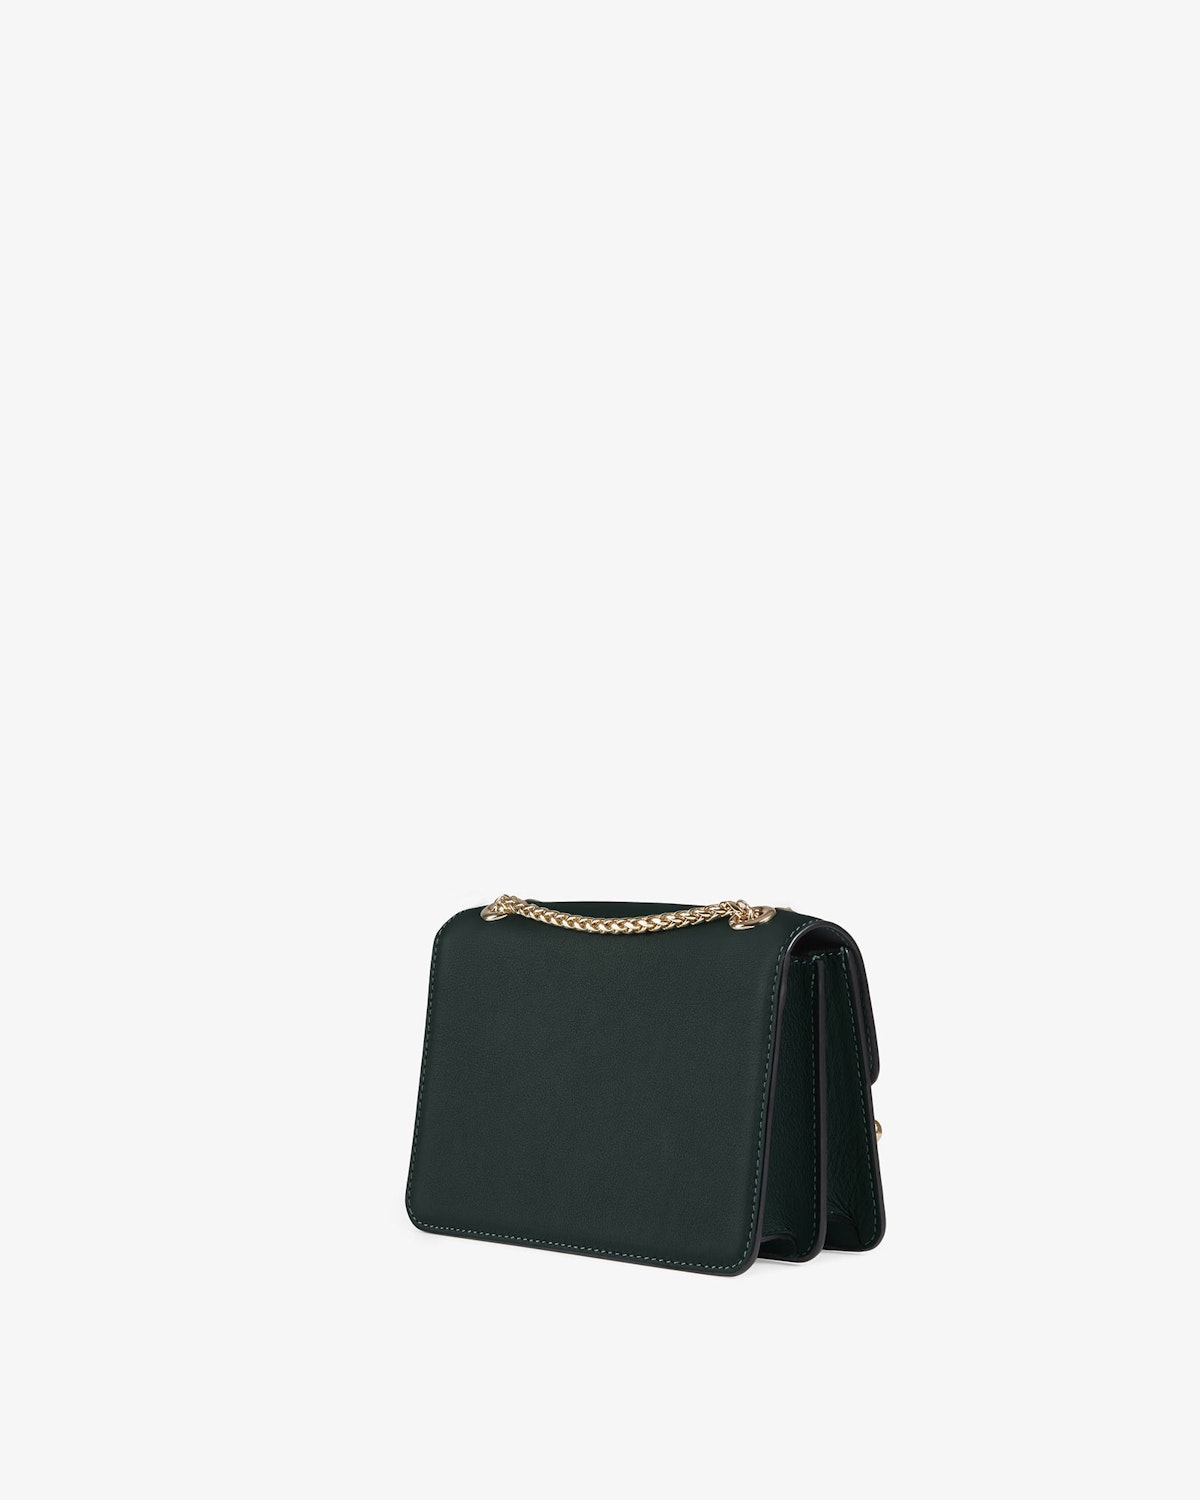 Strathberry - East/West Mini - Crossbody Leather Mini Handbag - Green ...